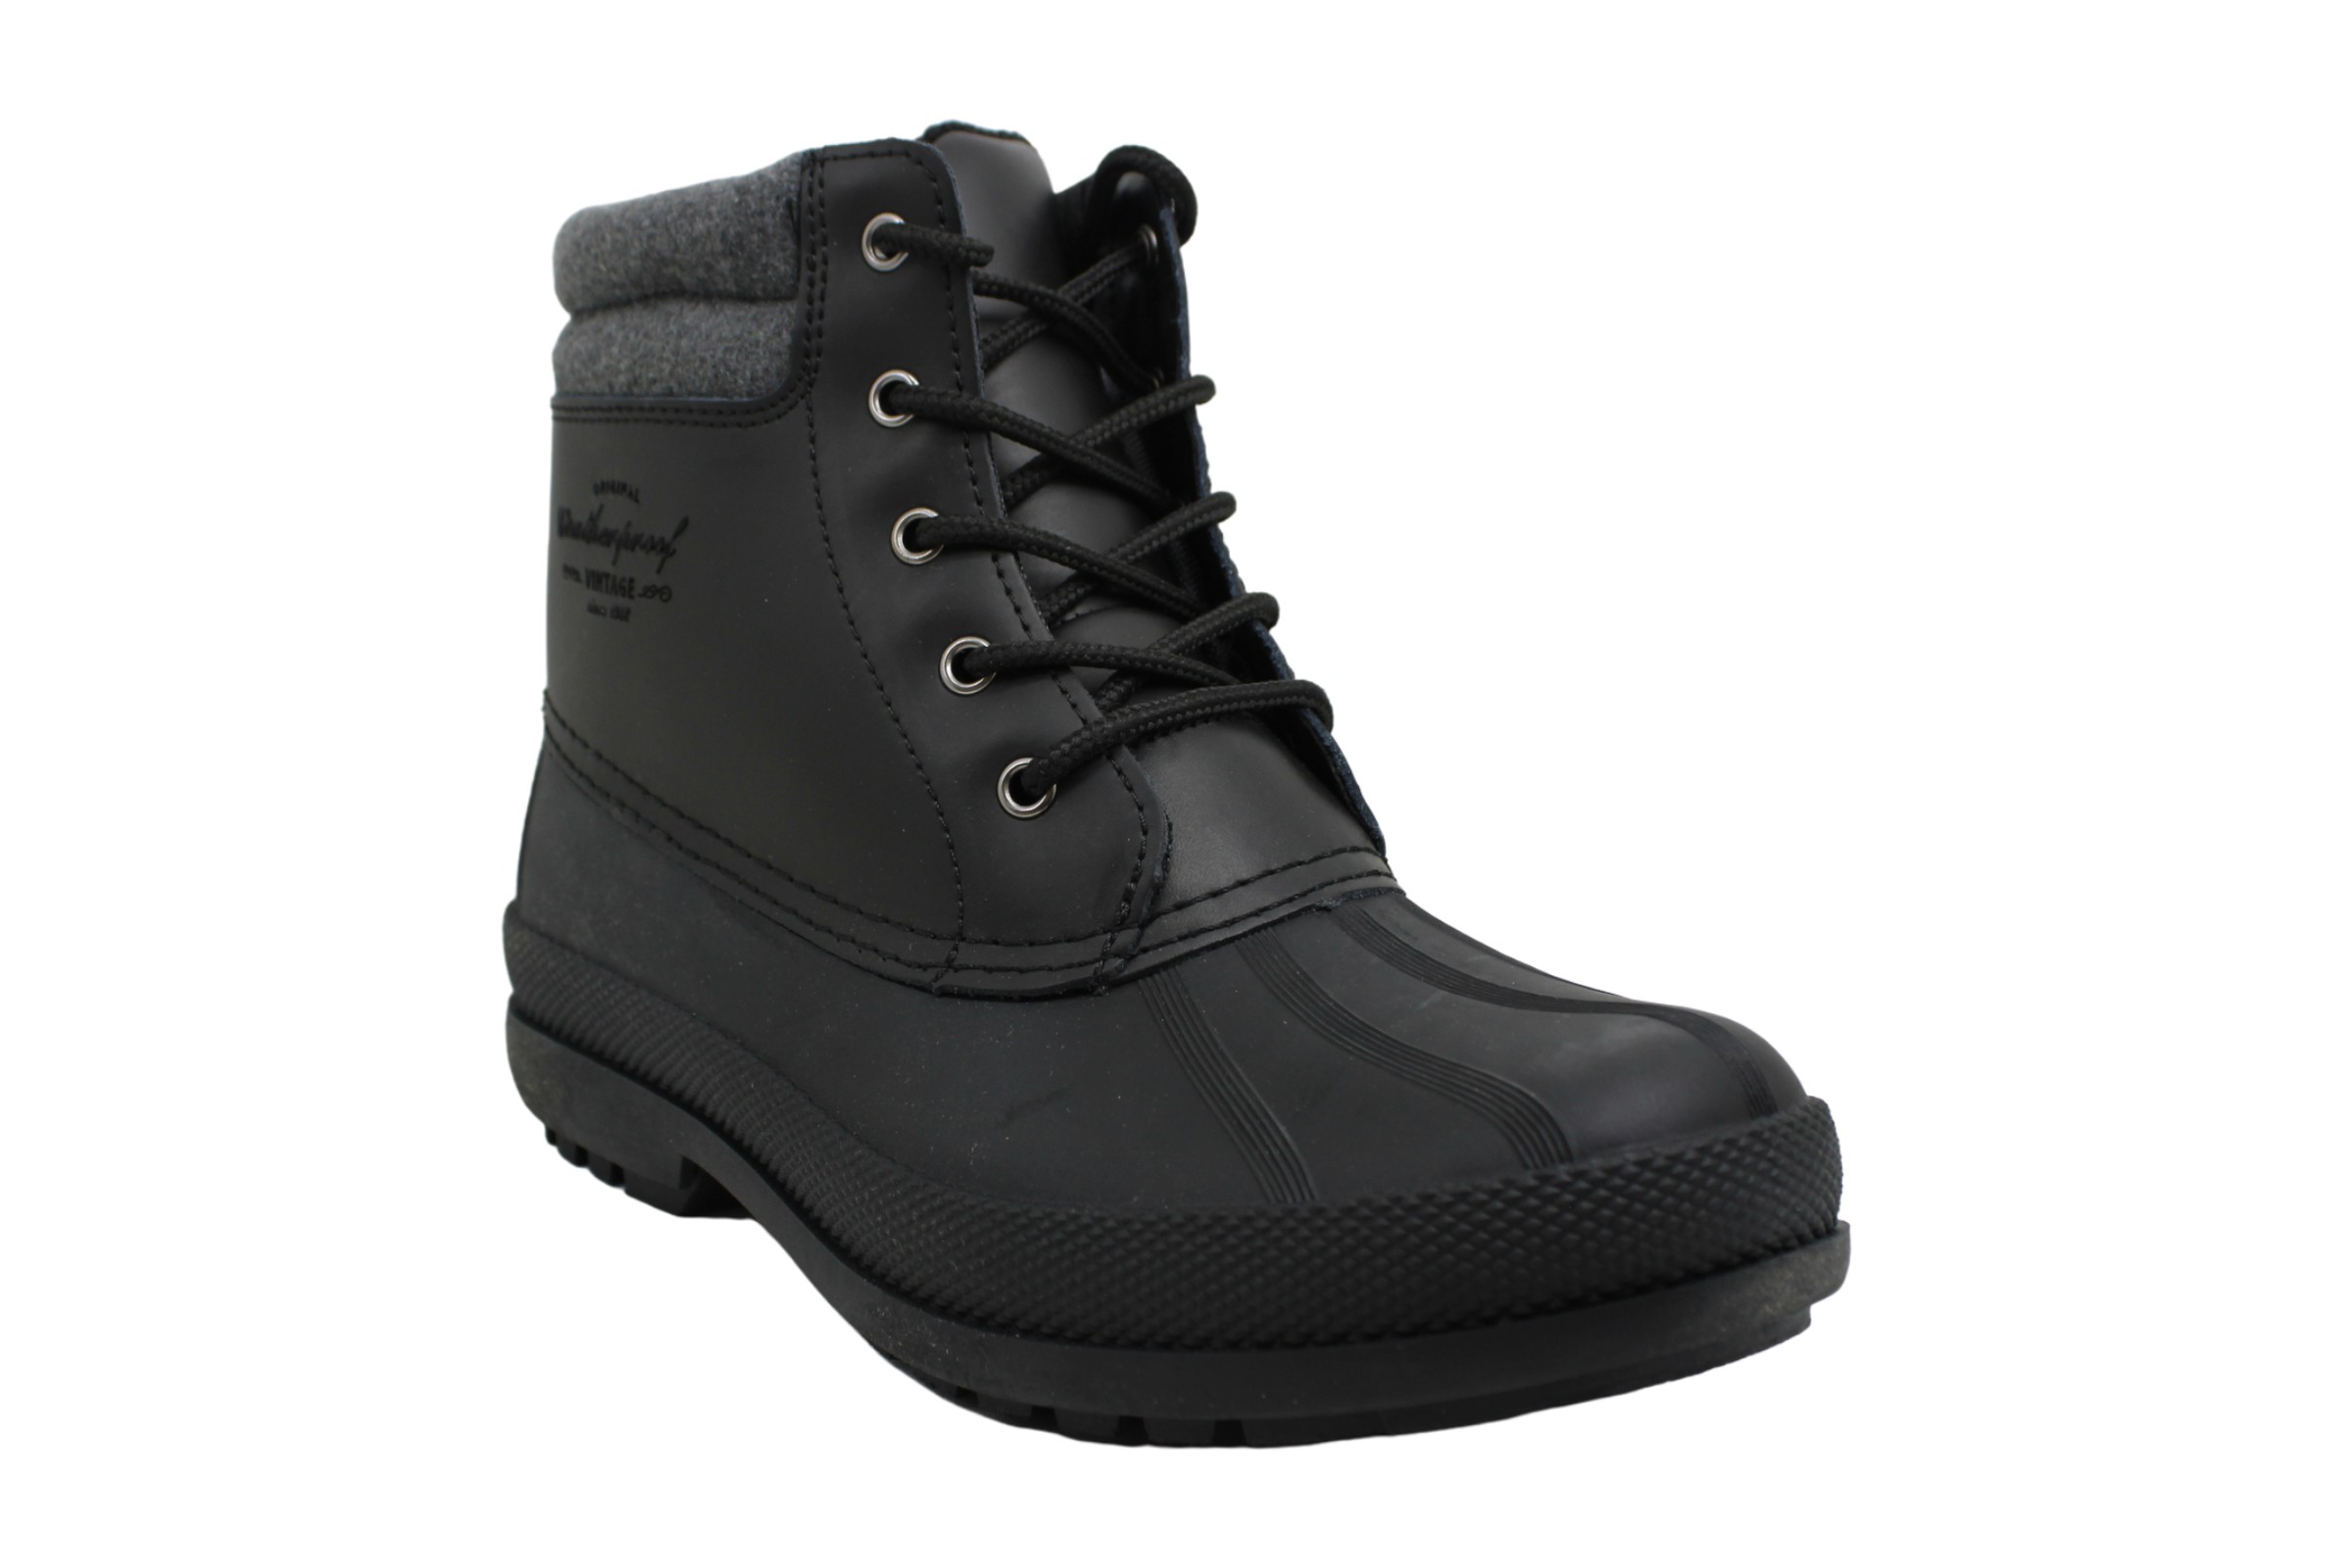 Weatherproof Mens Boots in Black Color, Size 9 NSU 889260373525 | eBay